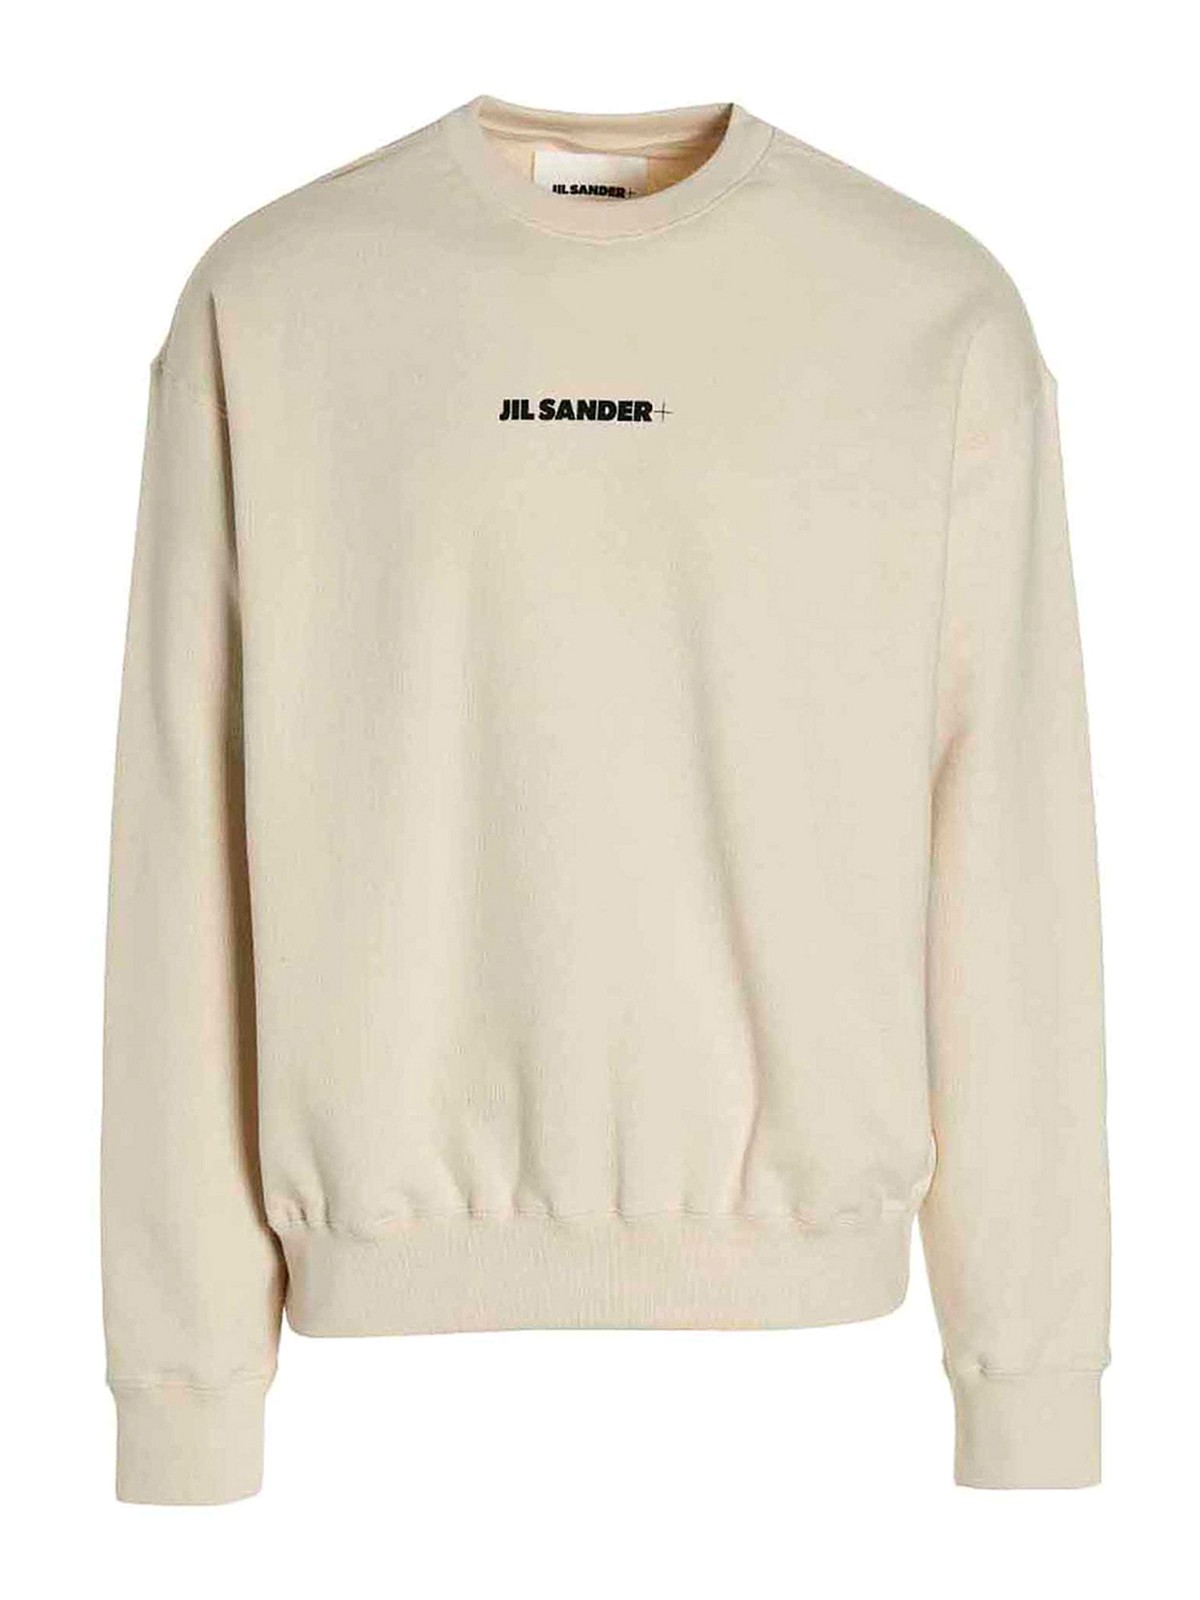 Jil Sander Logo Print Sweatshirt In Cream